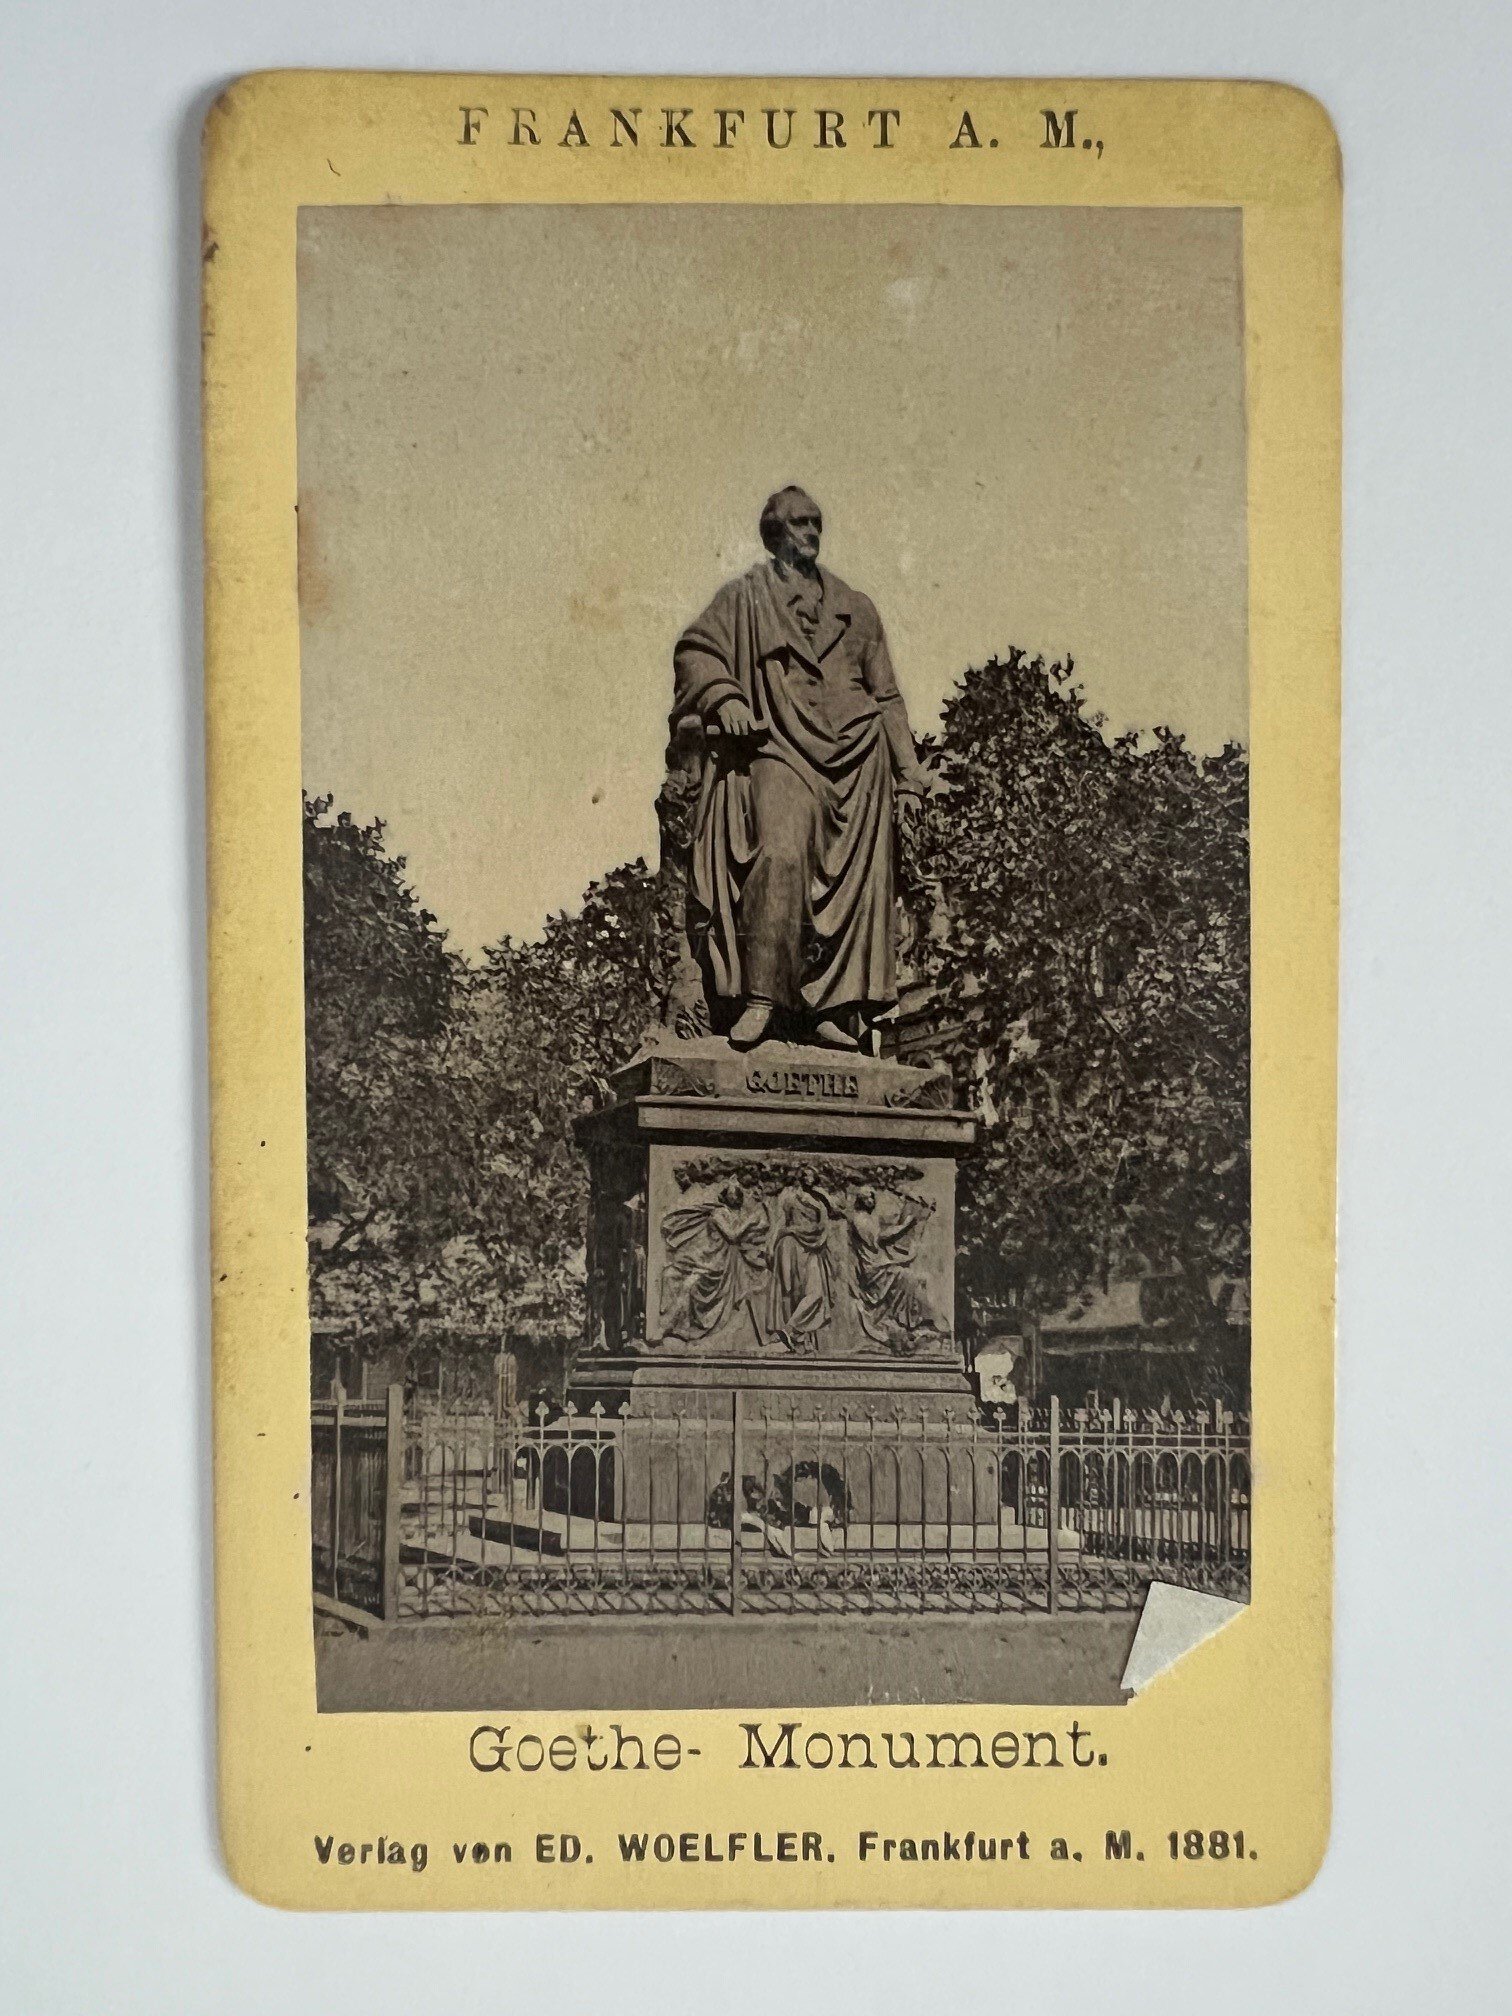 CdV, Frankfurt, Goethe-Monument, ca. 1877. (Taunus-Rhein-Main - Regionalgeschichtliche Sammlung Dr. Stefan Naas CC BY-NC-SA)